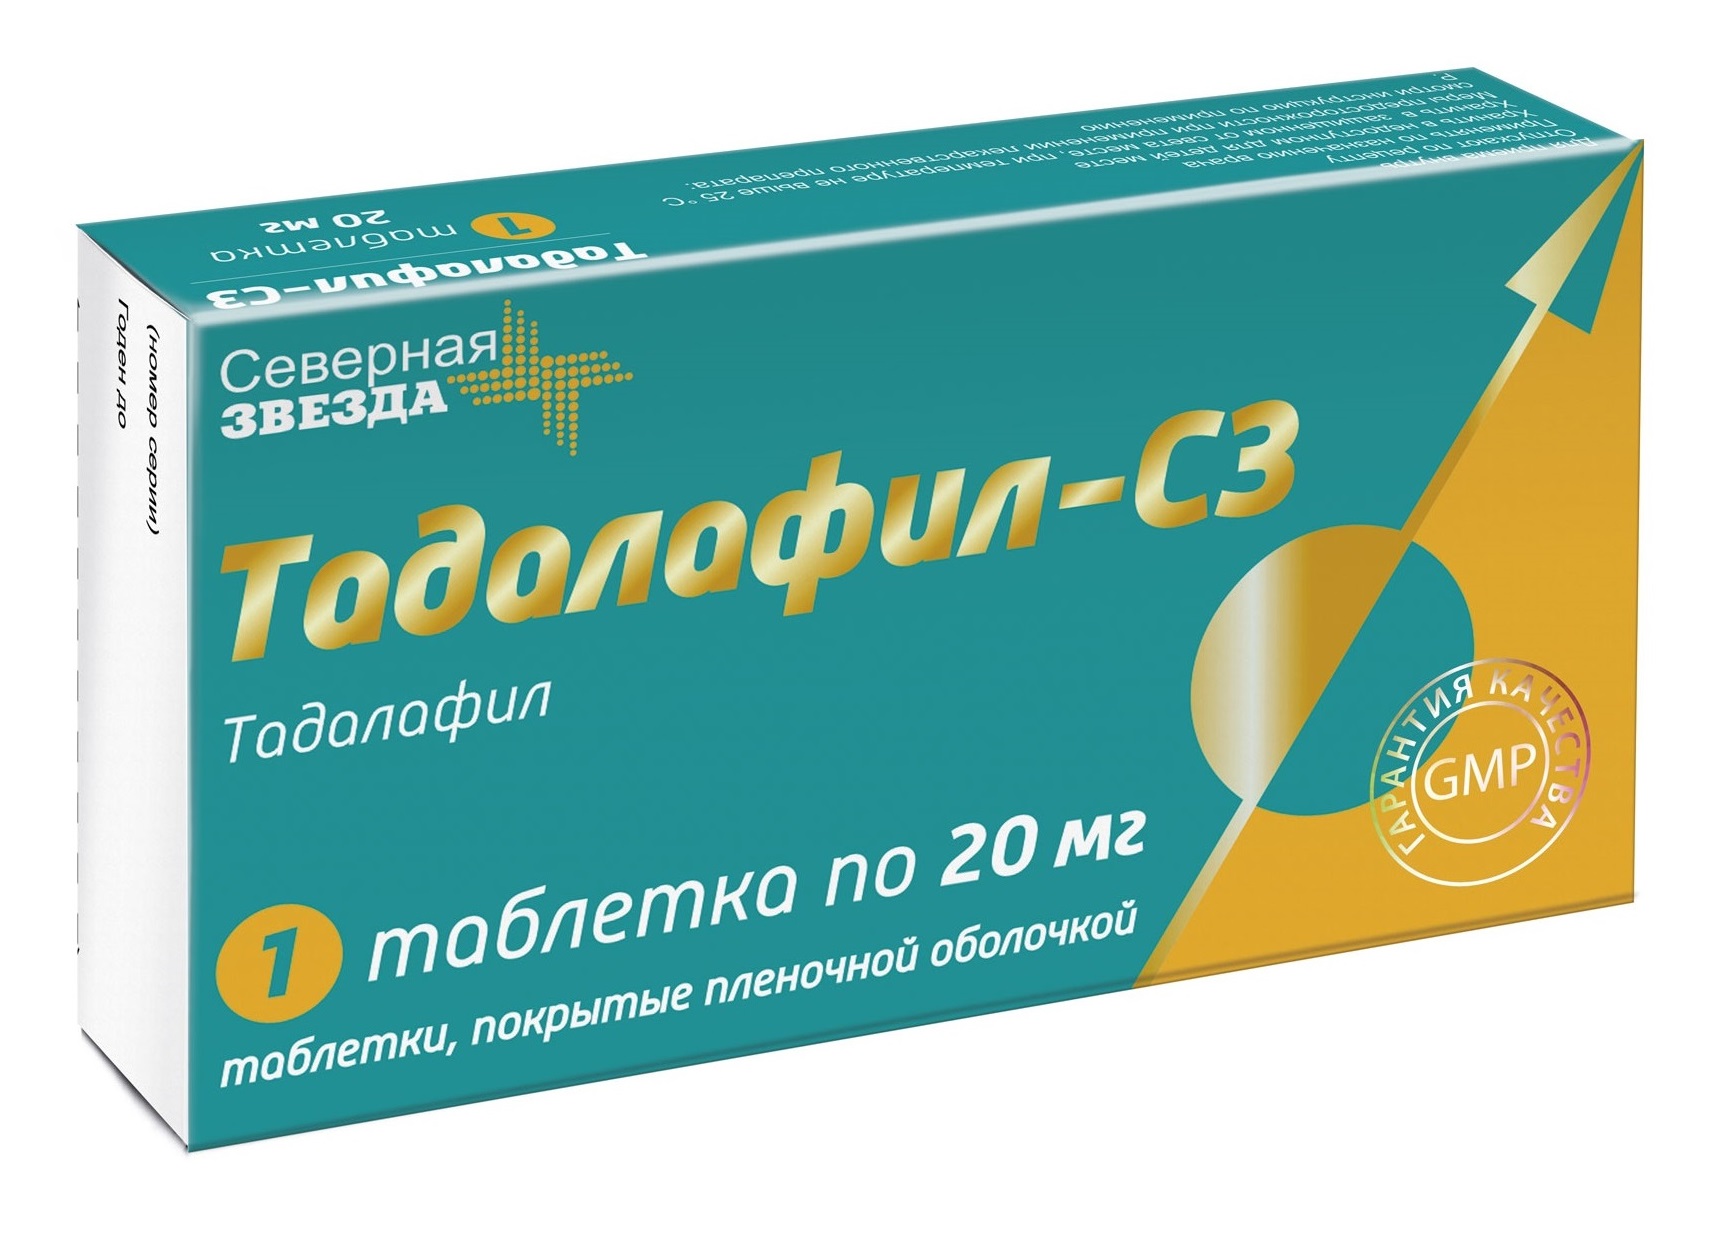 Тадалафил Цена В Аптеке Краснодар